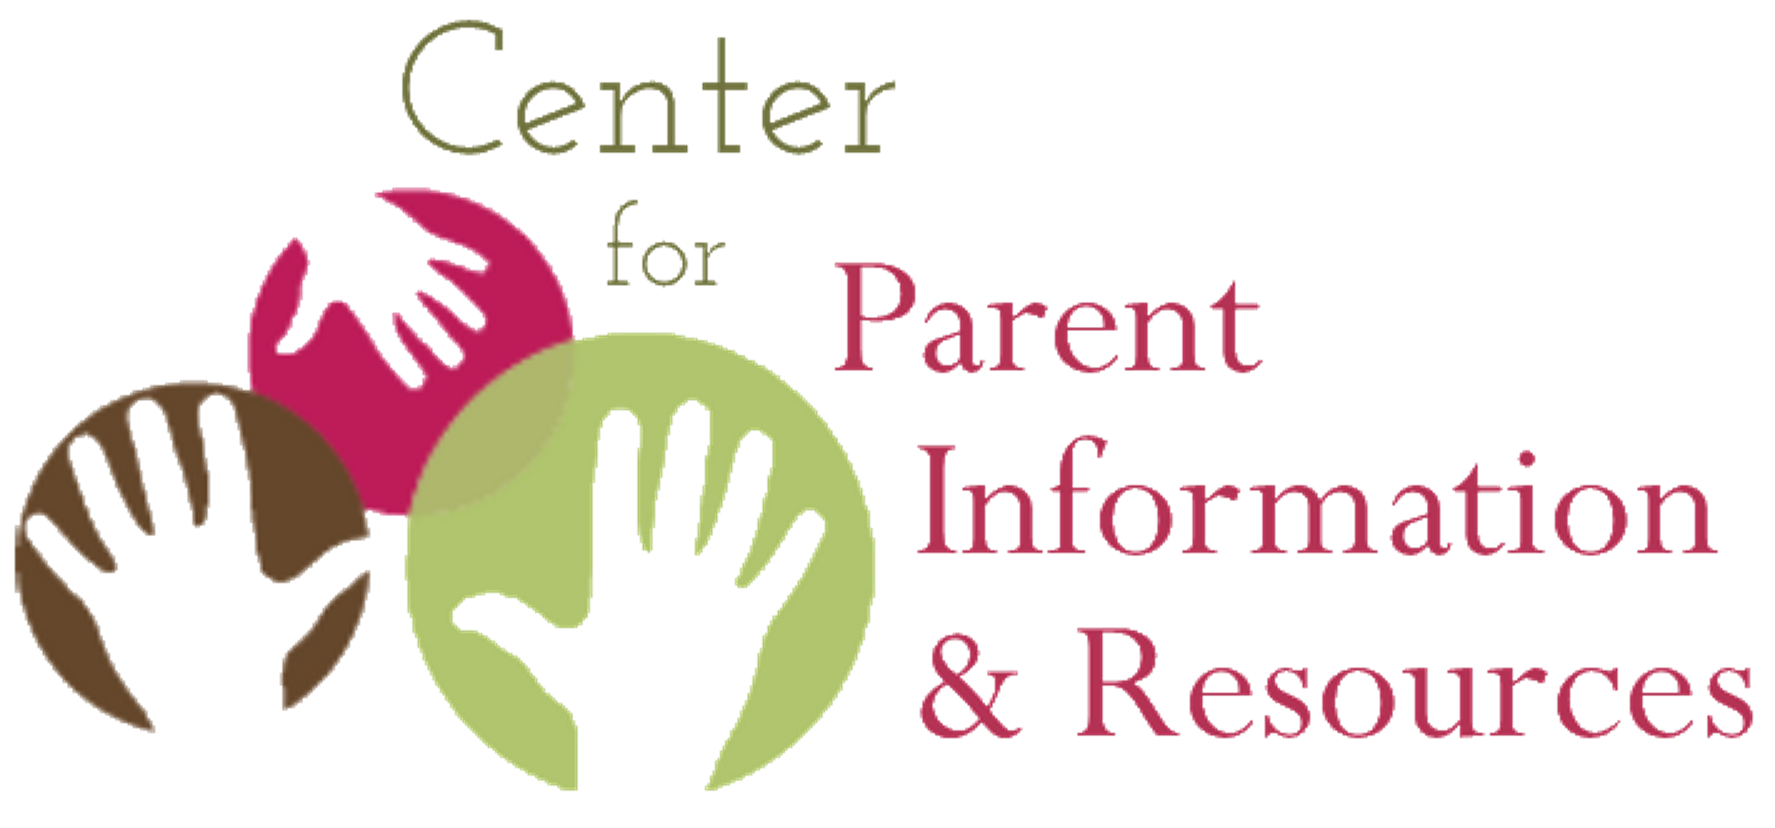 Center for Parent Information & Resources (CPIR)